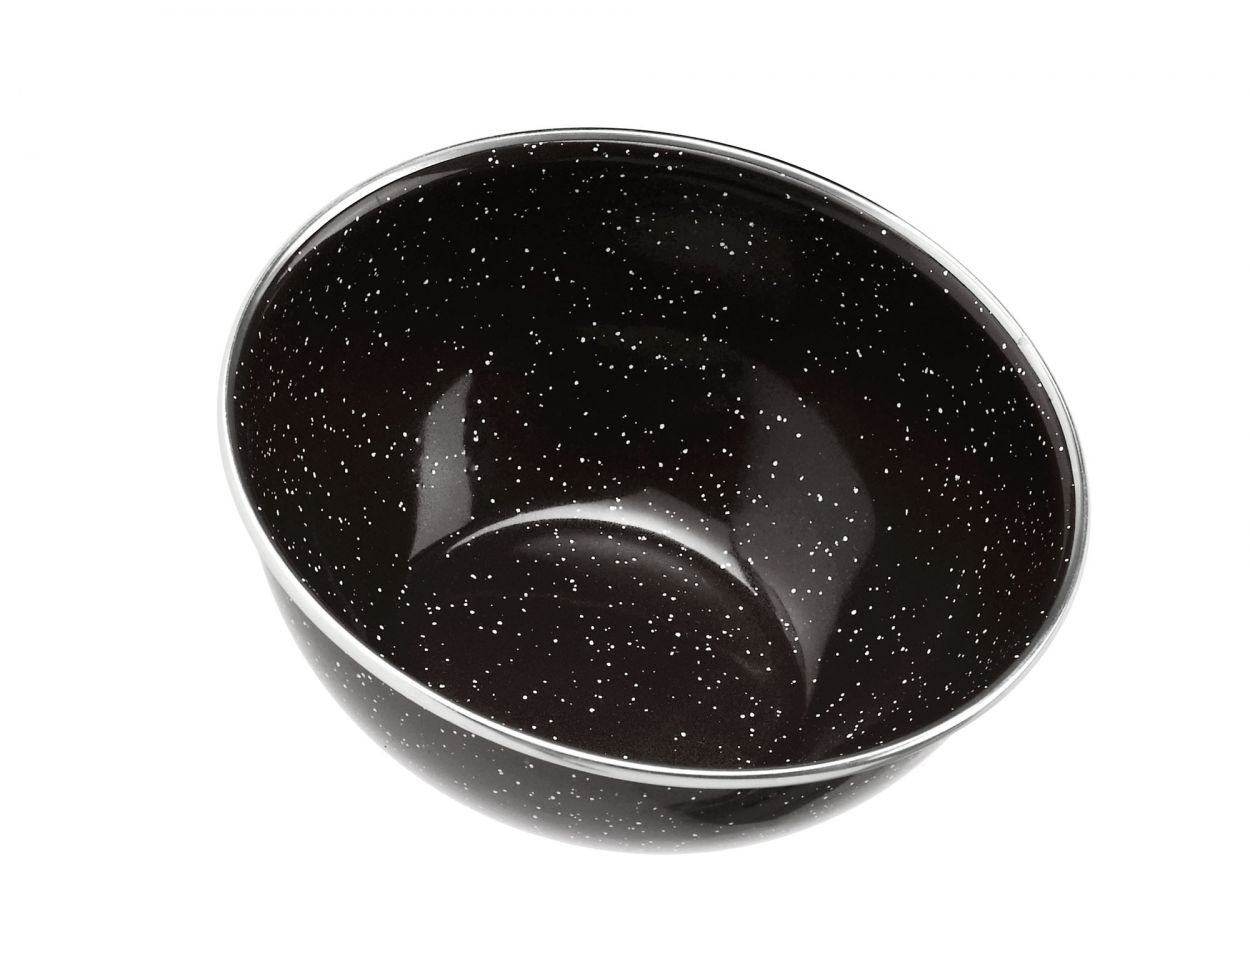 Stainless Steel Rim Black Cereal or Salad Bowl, 6", Set of 4